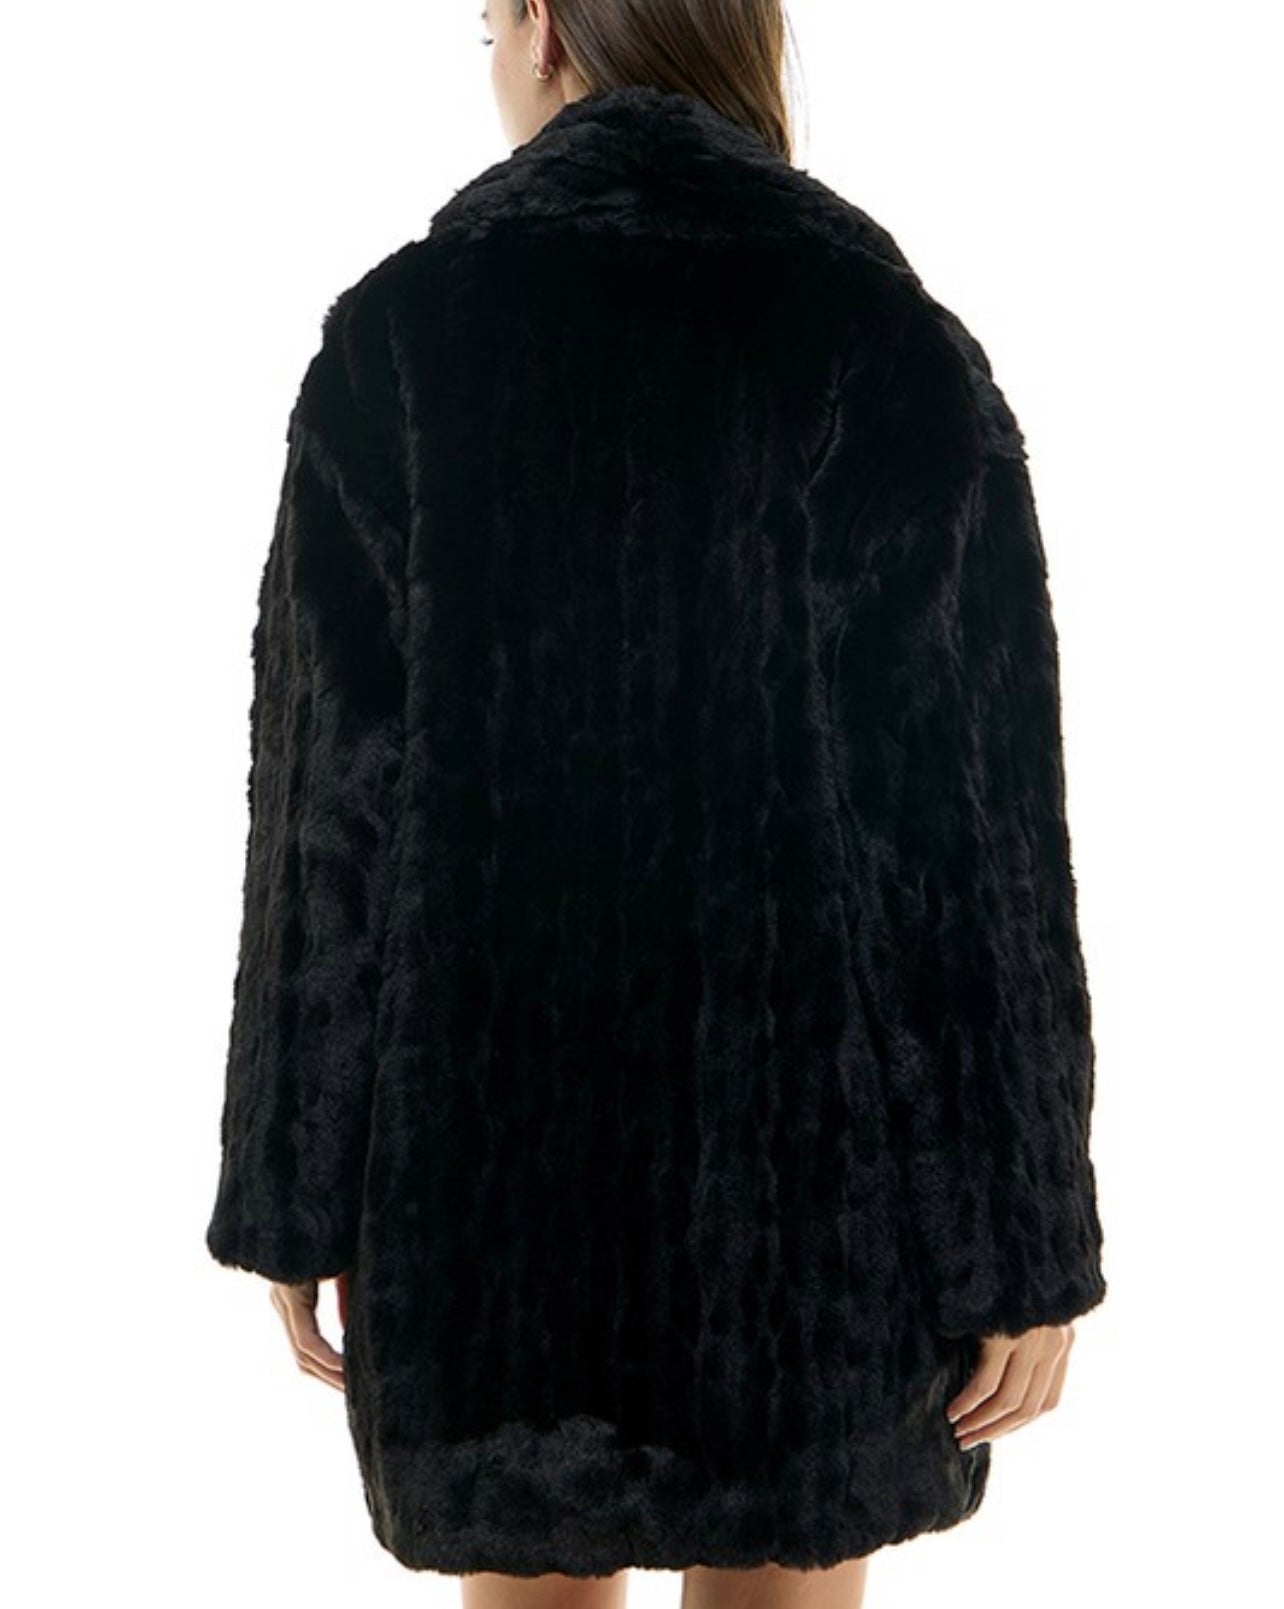 Ritz Black Fur Coat